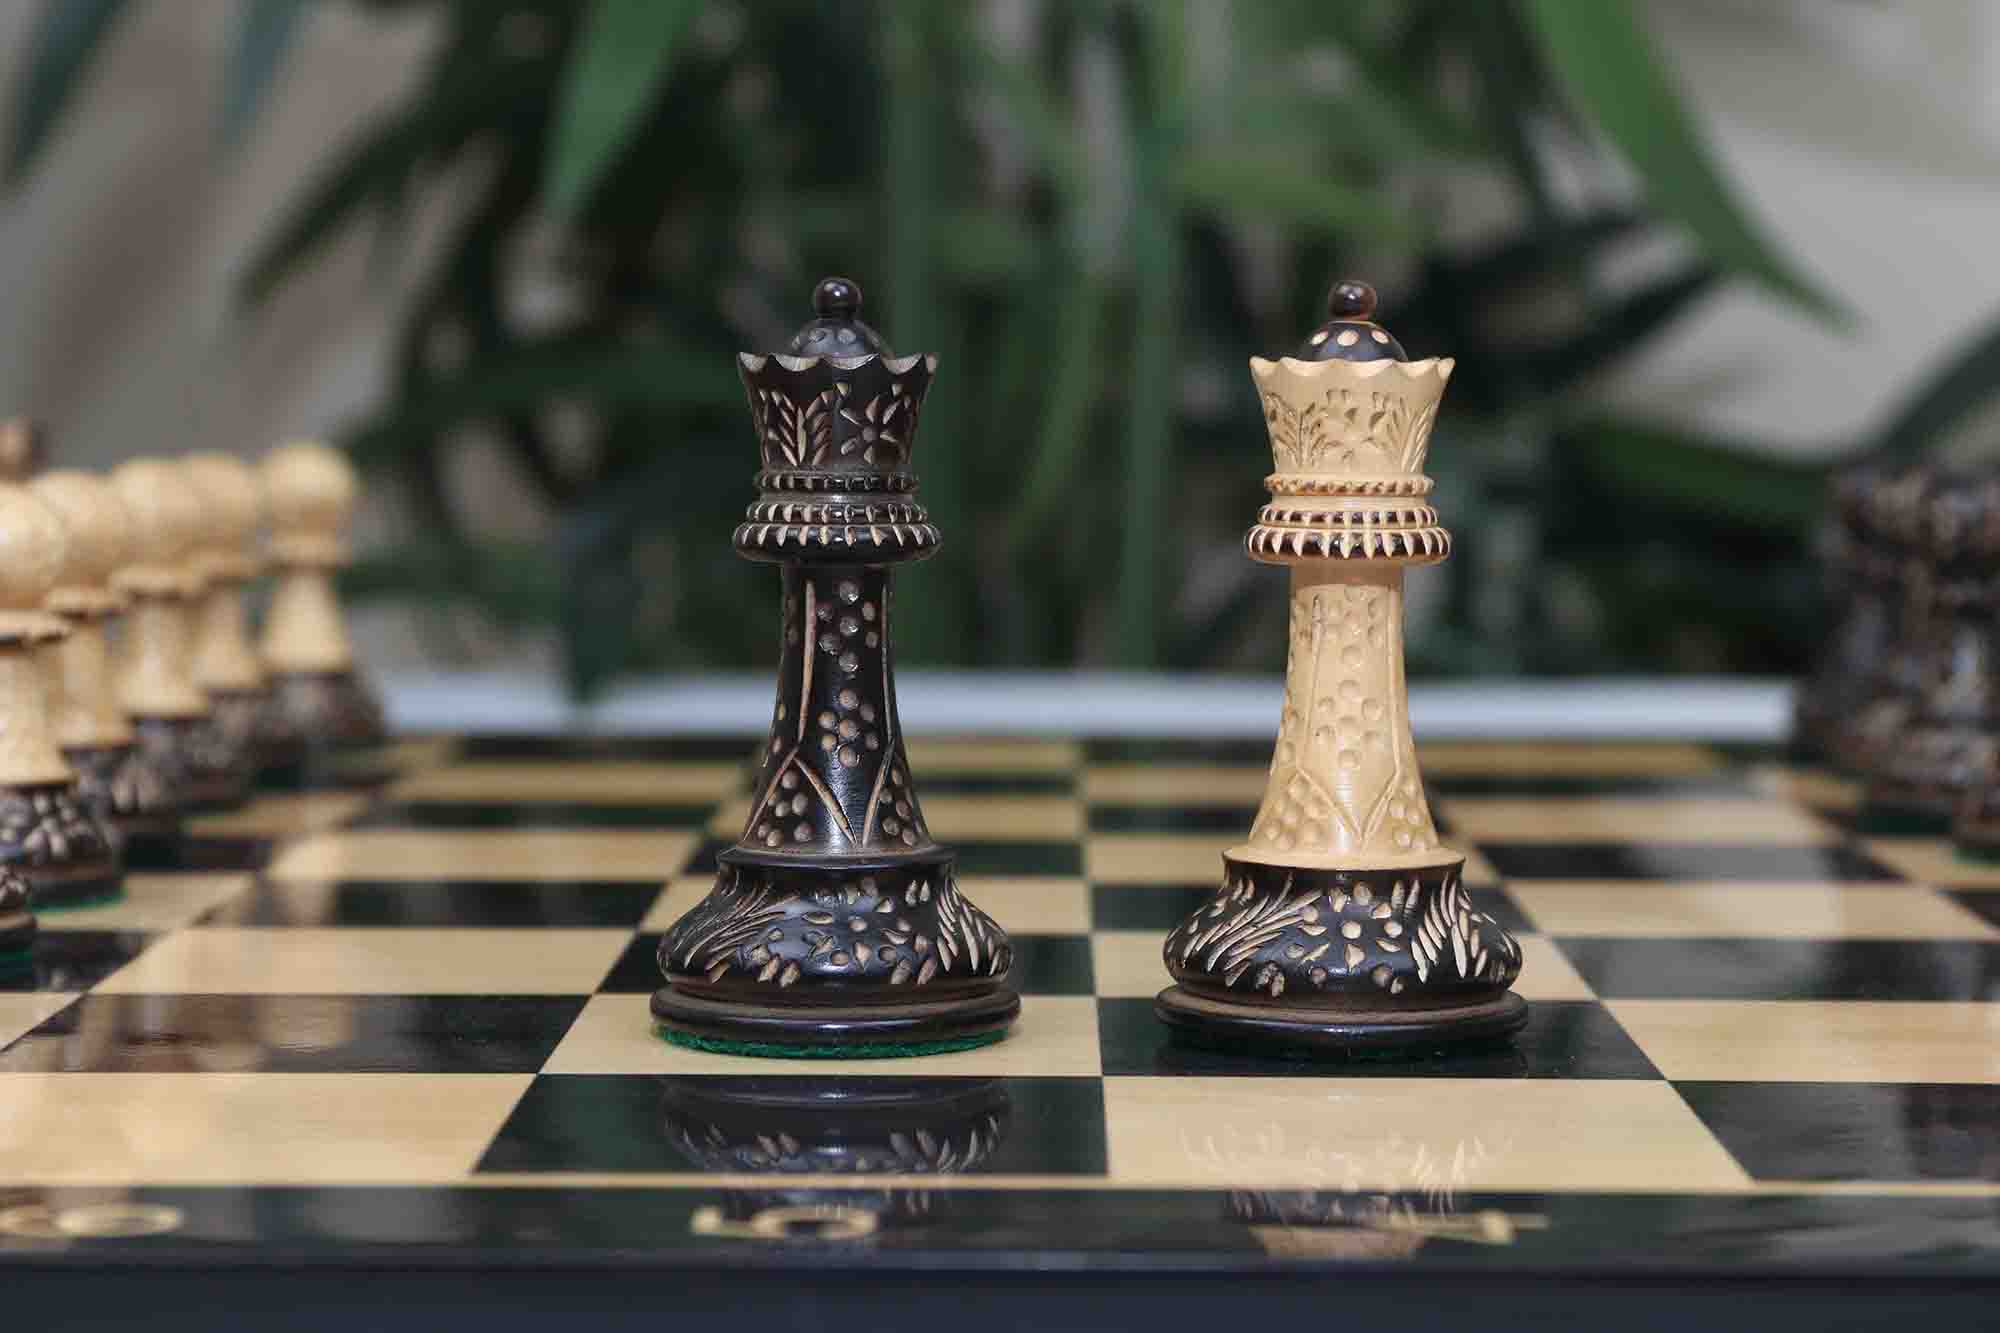 Leningrad Series 4" Luxury Staunton Chess Set in Burnt Boxwood